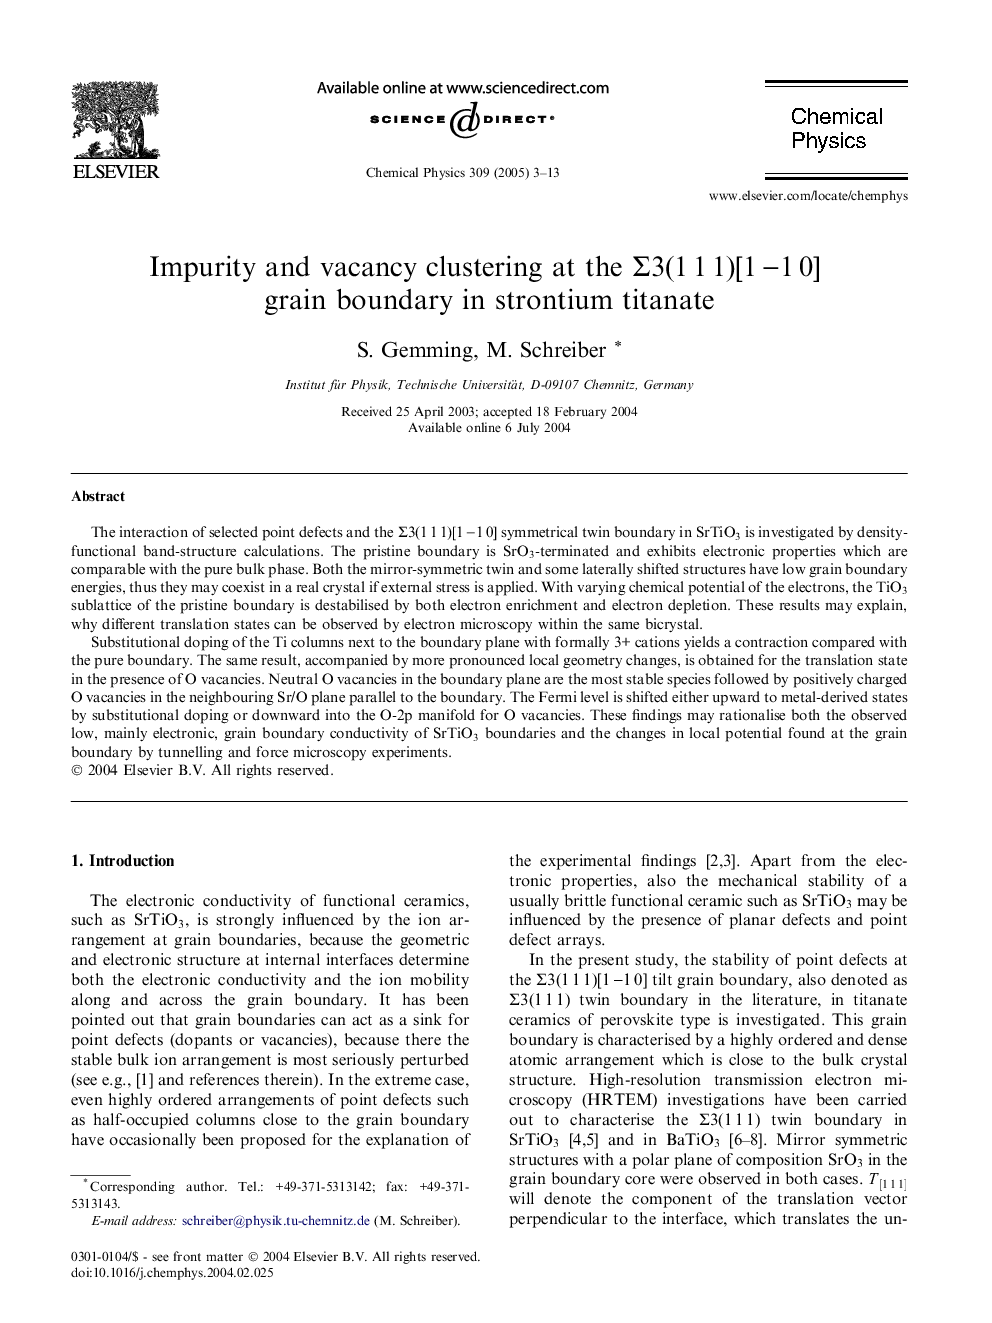 Impurity and vacancy clustering at the Î£3(1Â 1Â 1)[1Â â1Â 0] grain boundary in strontium titanate